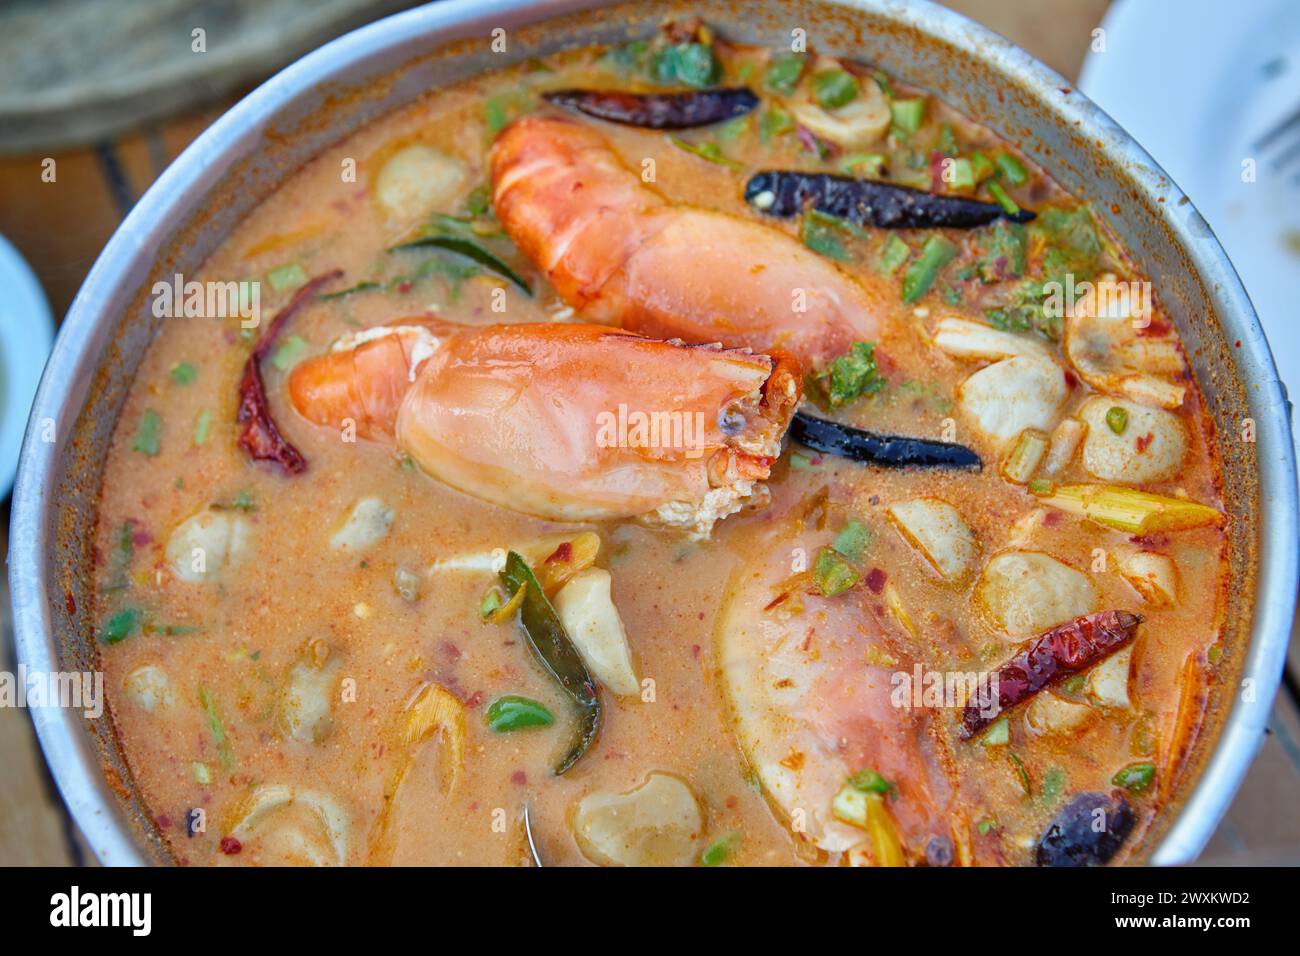 Piccante Tom Yum Goong famoso cibo tailandese con ingrediente in una ciotola Foto Stock